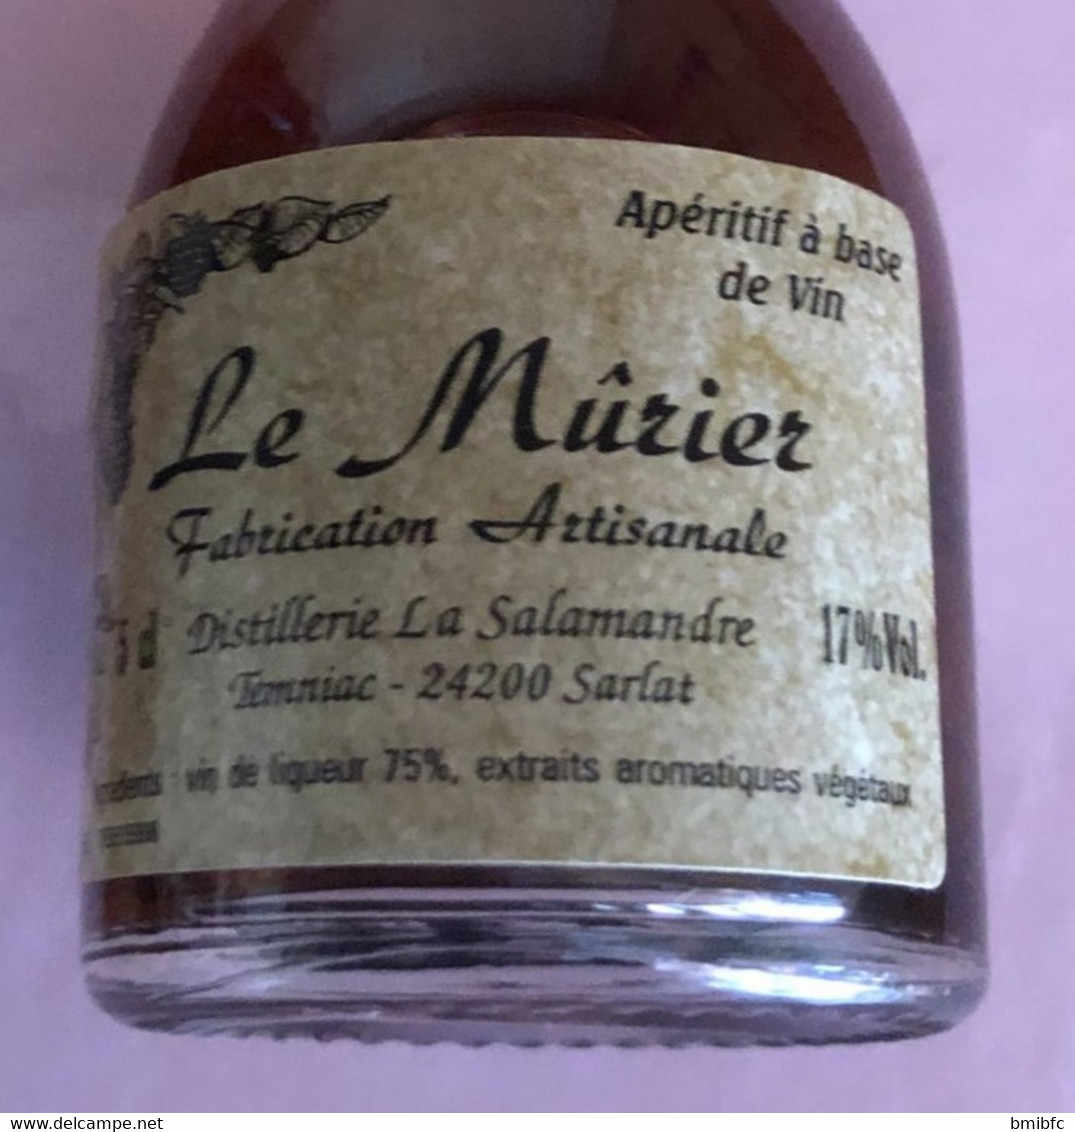 Le  Mûrier Fabrication Artisanale Distillerie La Salamandre  -  Temniac  - 24200 SARLAT - 5cl - 17% Vol - Miniatures